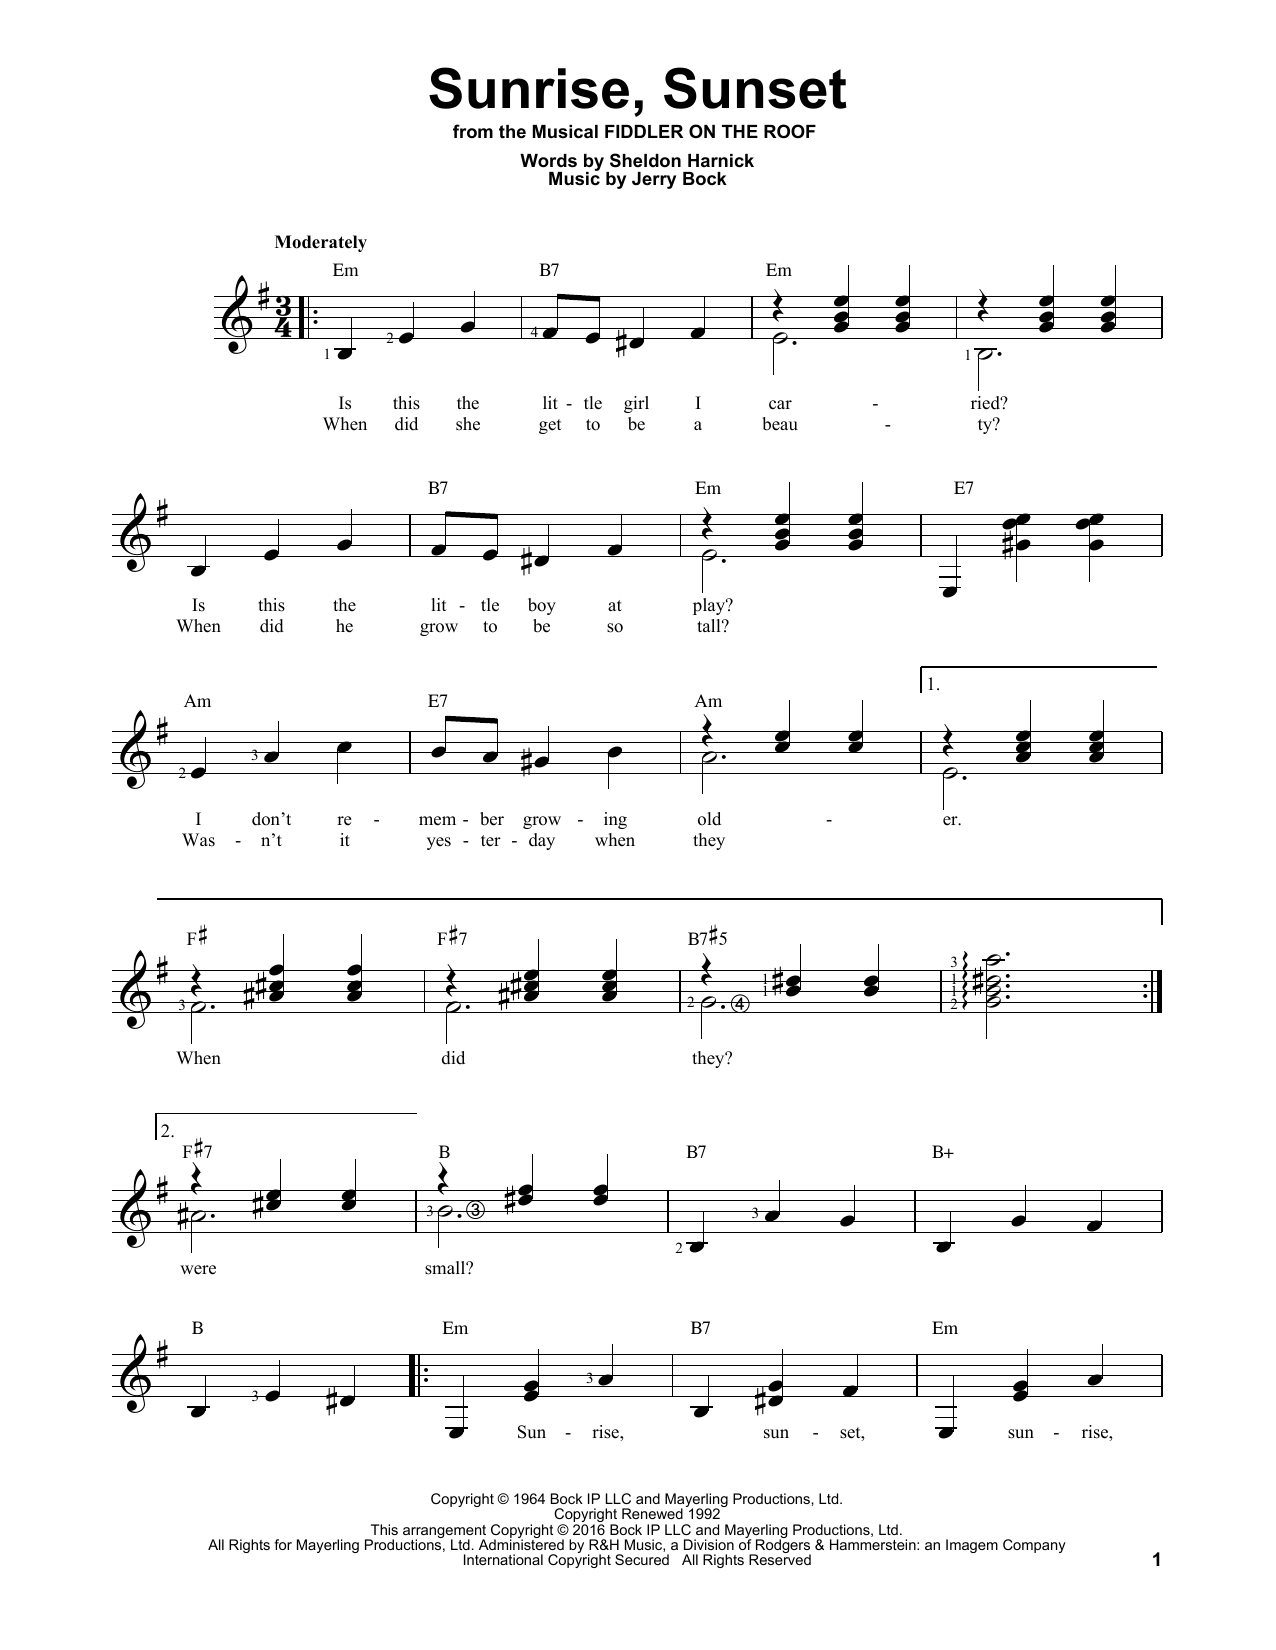 Sheldon Harnick Sunrise, Sunset Sheet Music Notes & Chords for Melody Line, Lyrics & Chords - Download or Print PDF